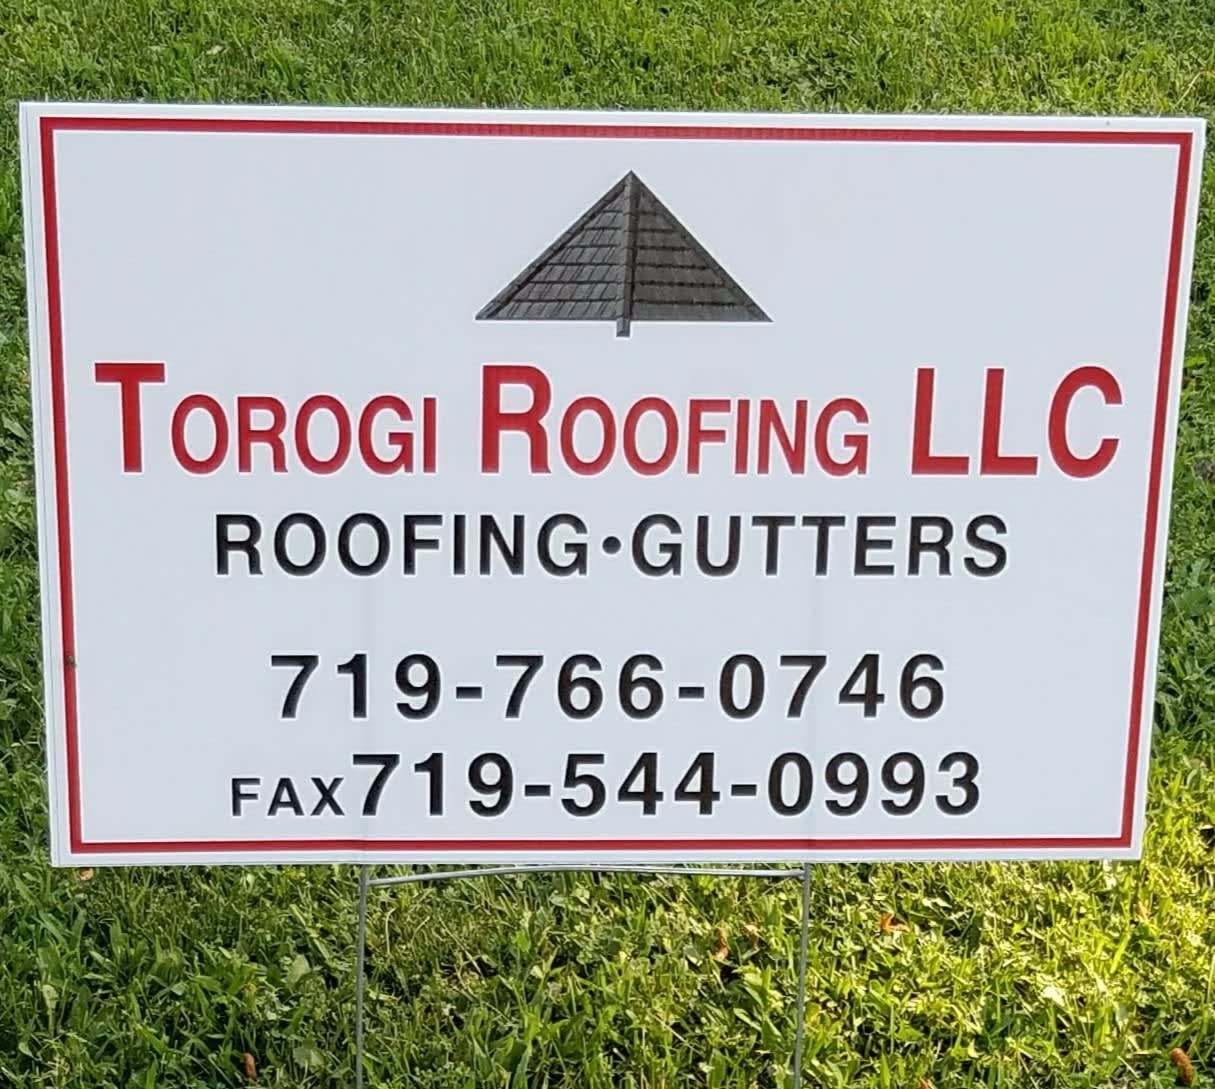 Torogi Roofing LLC